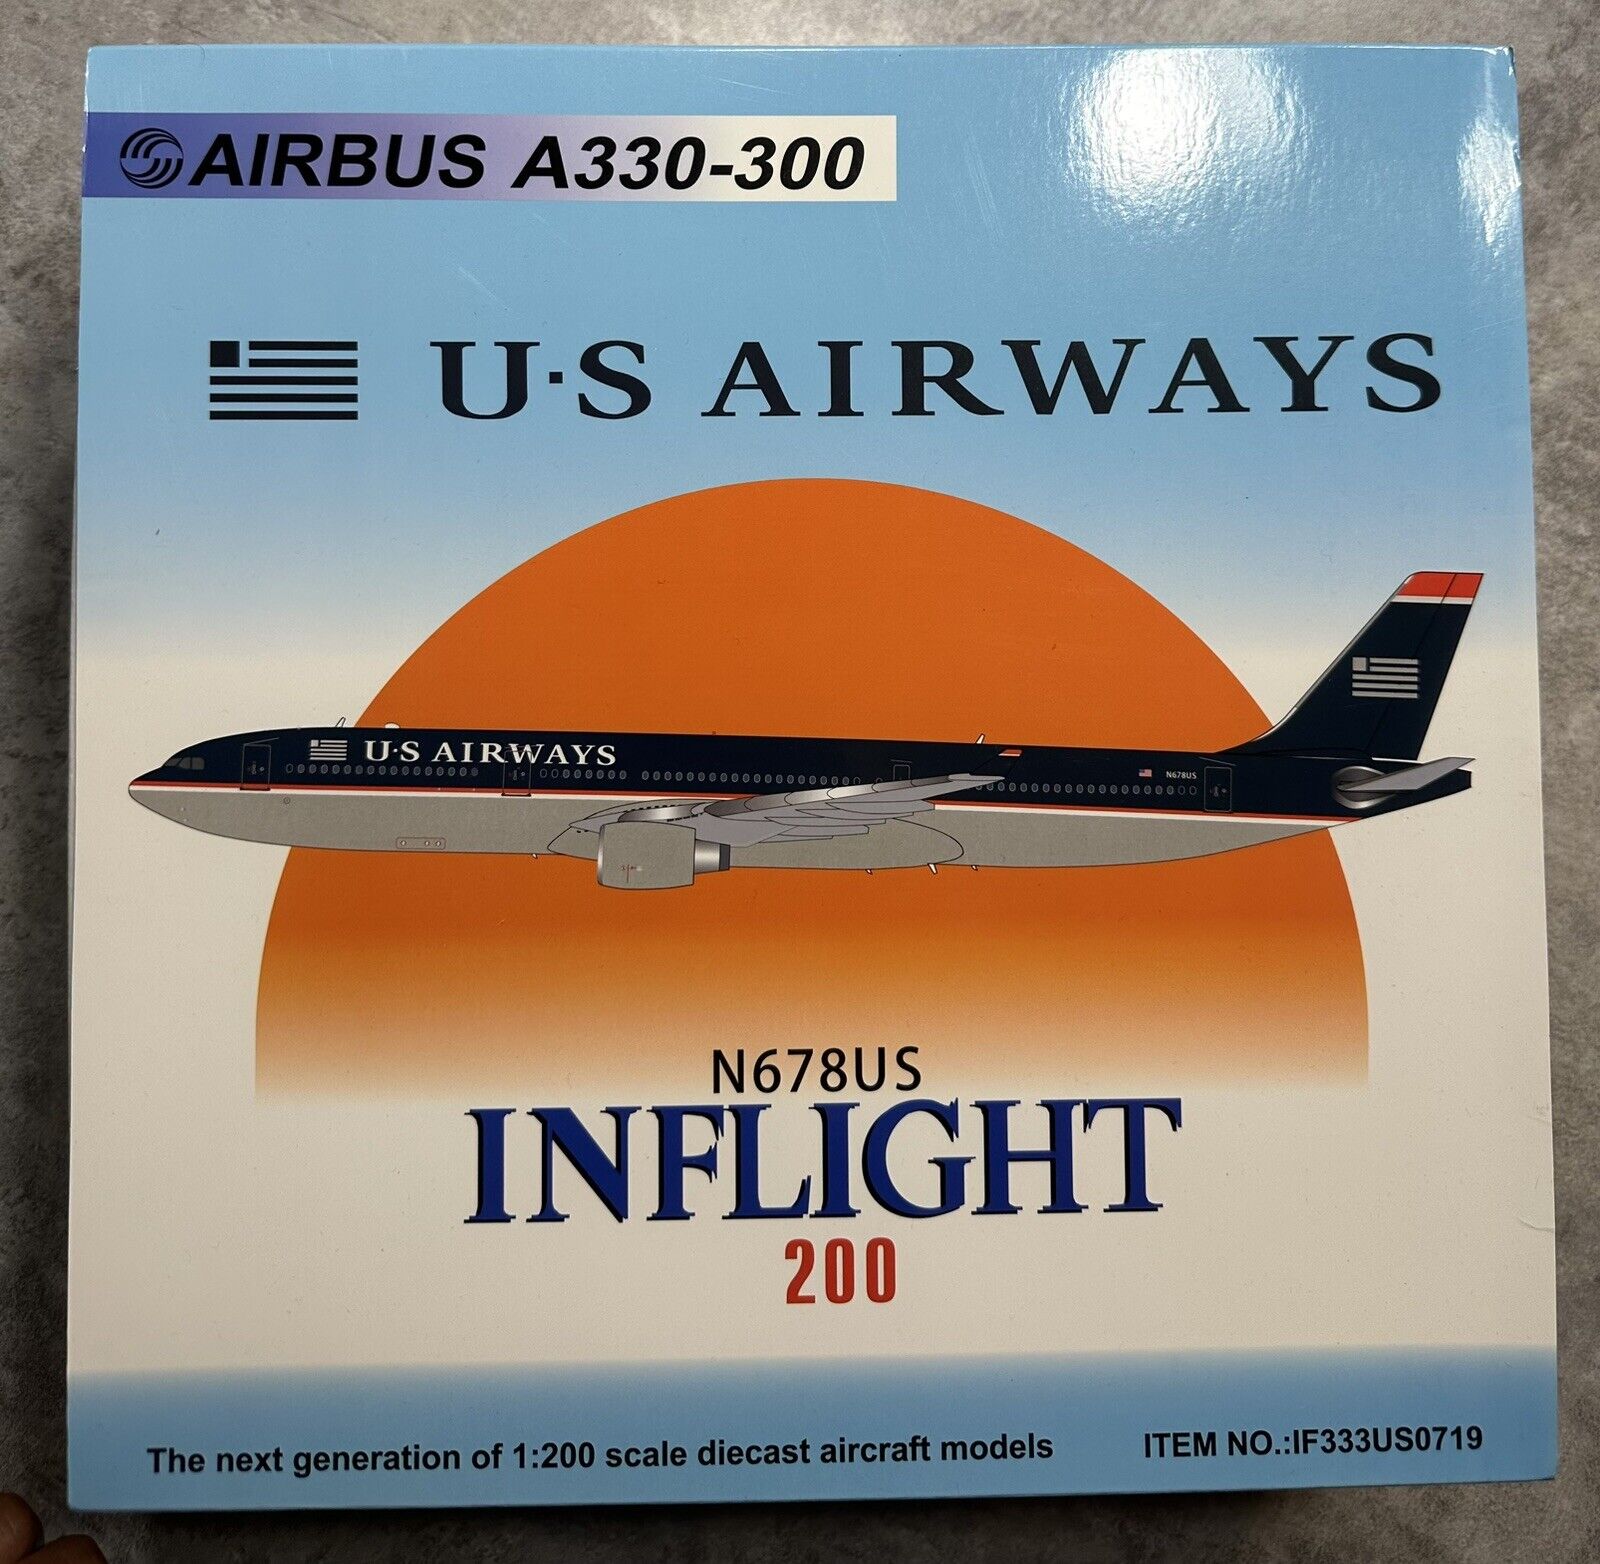 Inflight 200 U.S. Airways Airbus A330-300 IF333US0719